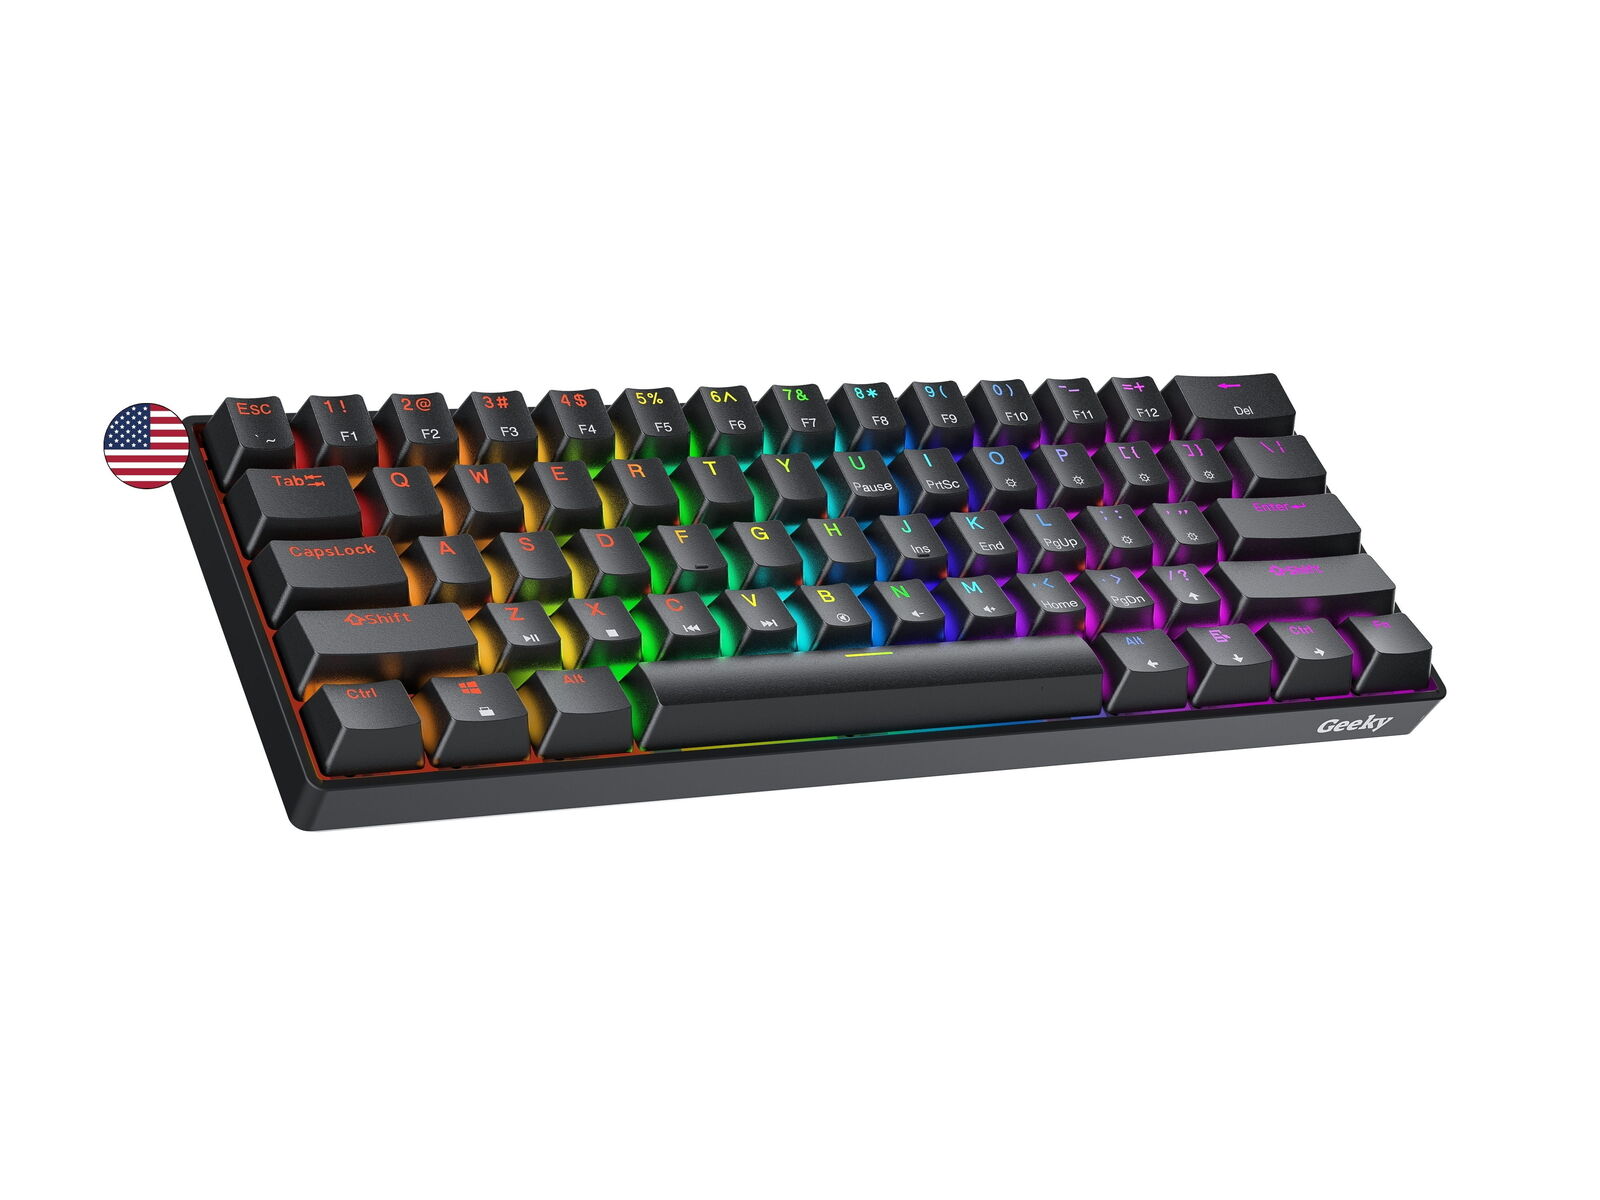 Geeky GK61 SE 60% | Mechanical Gaming Keyboard | 61 Keys Multi Color RGB LED